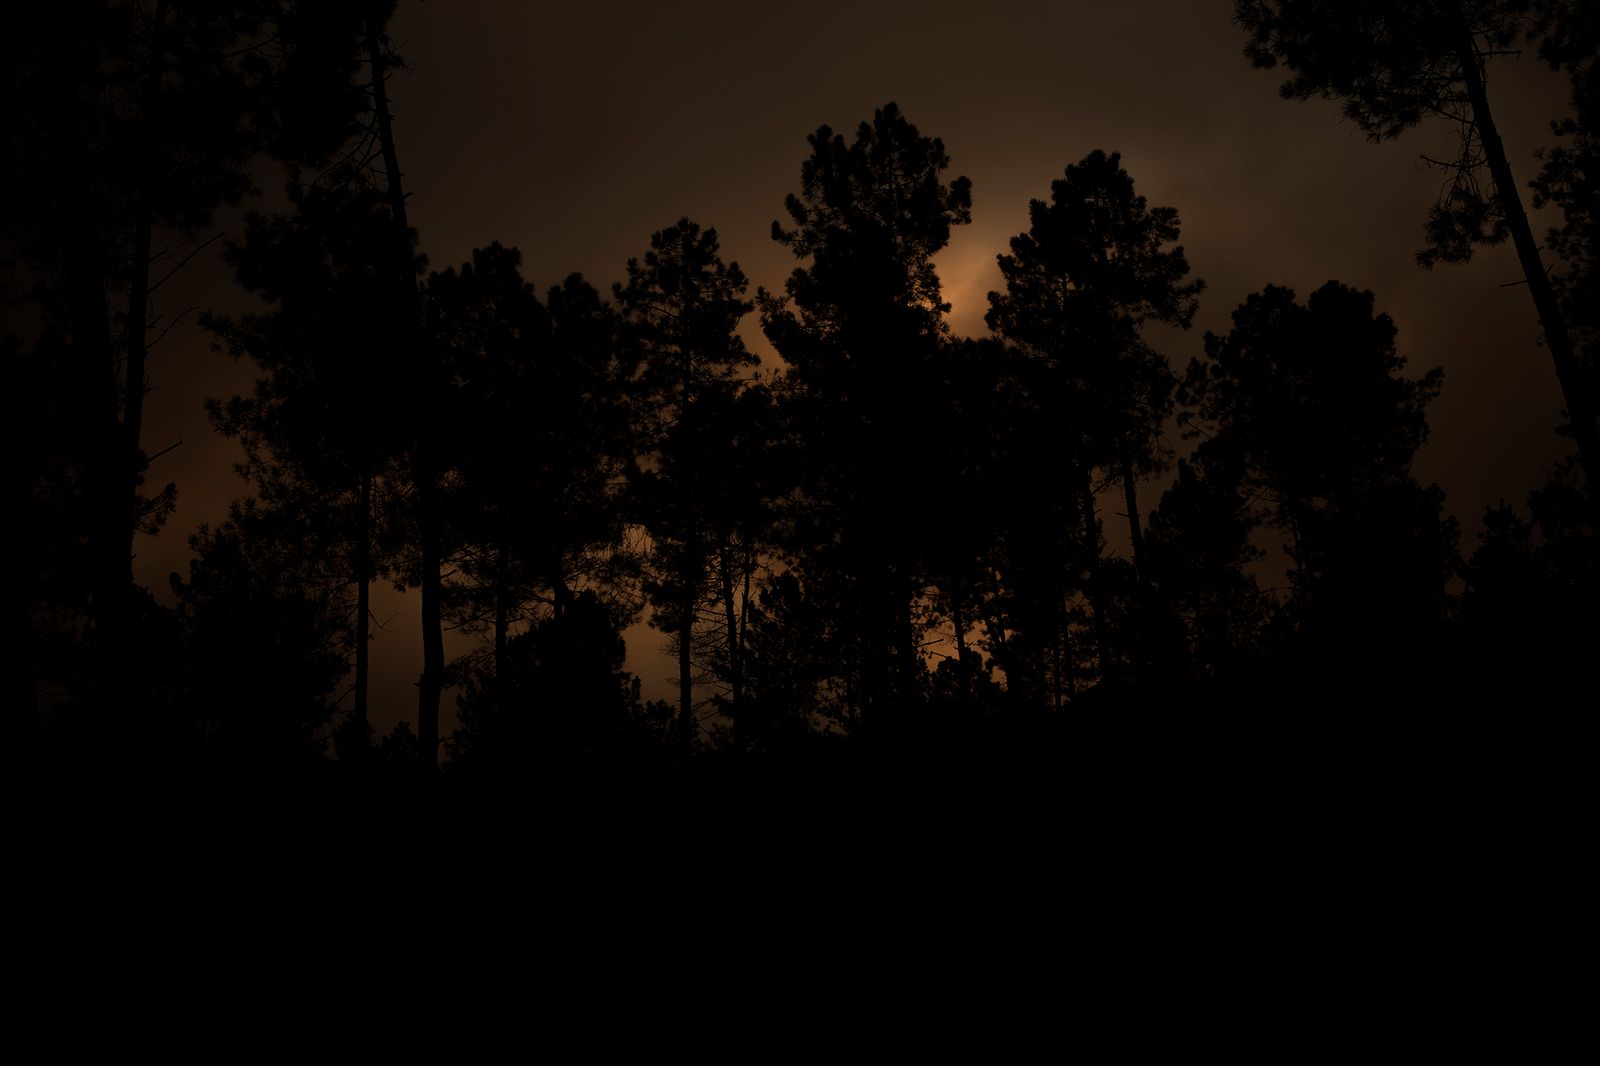 © Oskar Alvarado - Image from the Where Fireflies Unfold photography project